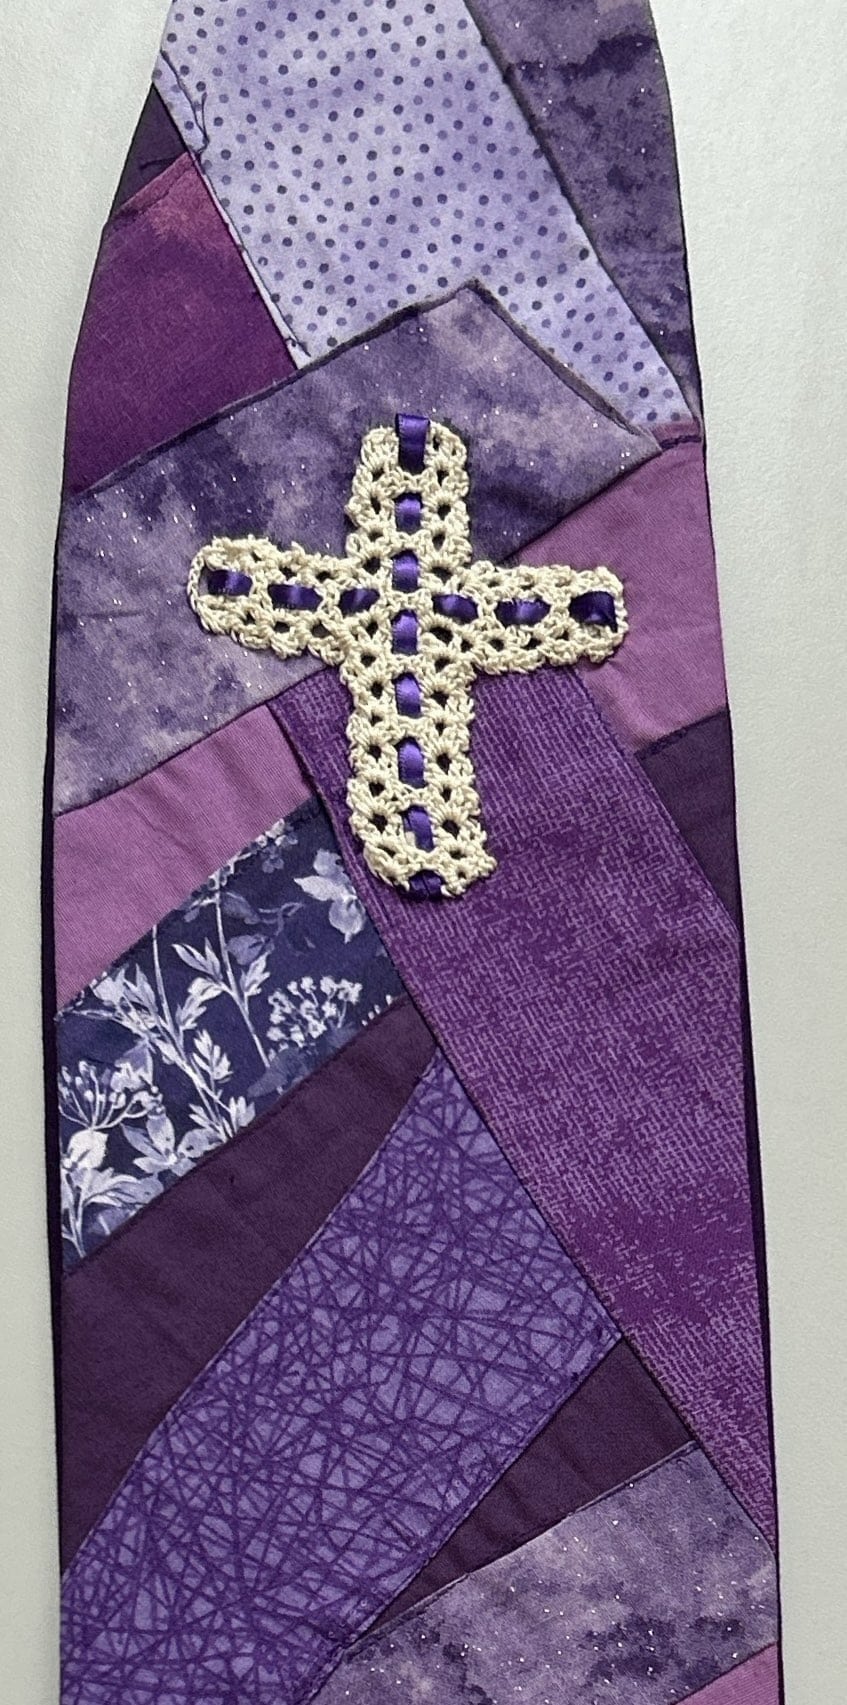 Purple stole sewn using the "crazy quilt" design.